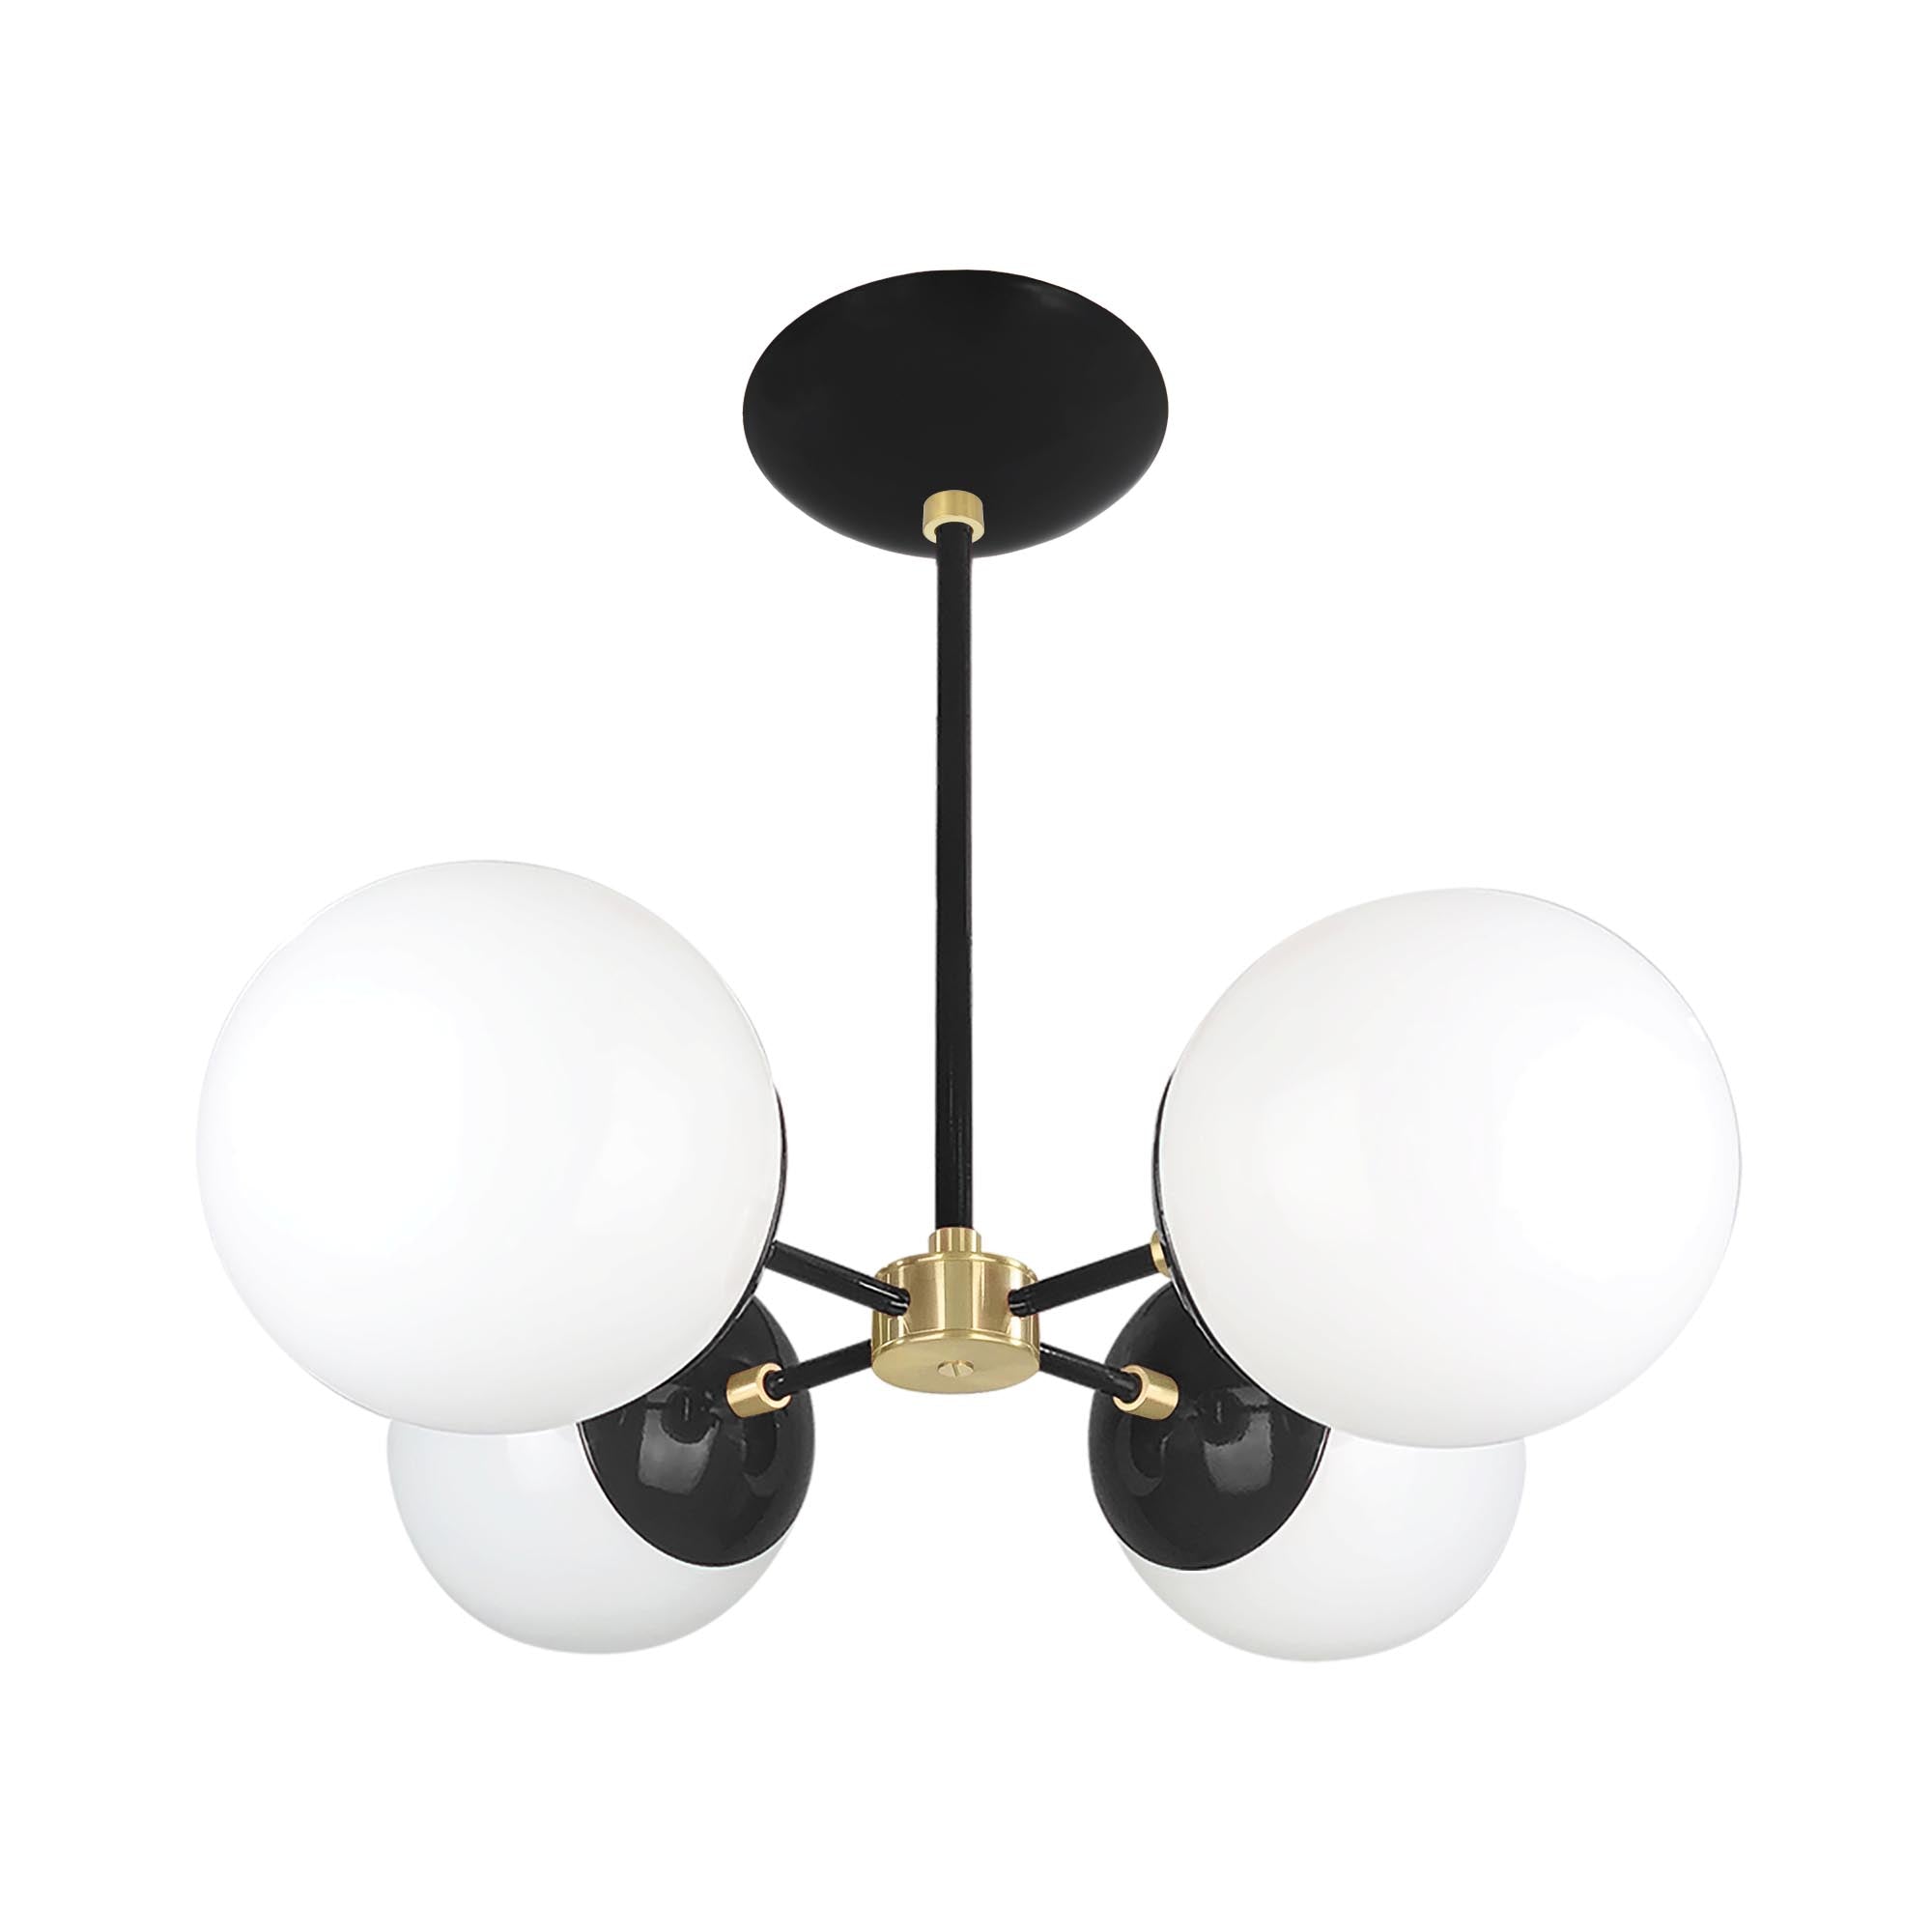 Brass and black color Orbi chandelier Dutton Brown lighting